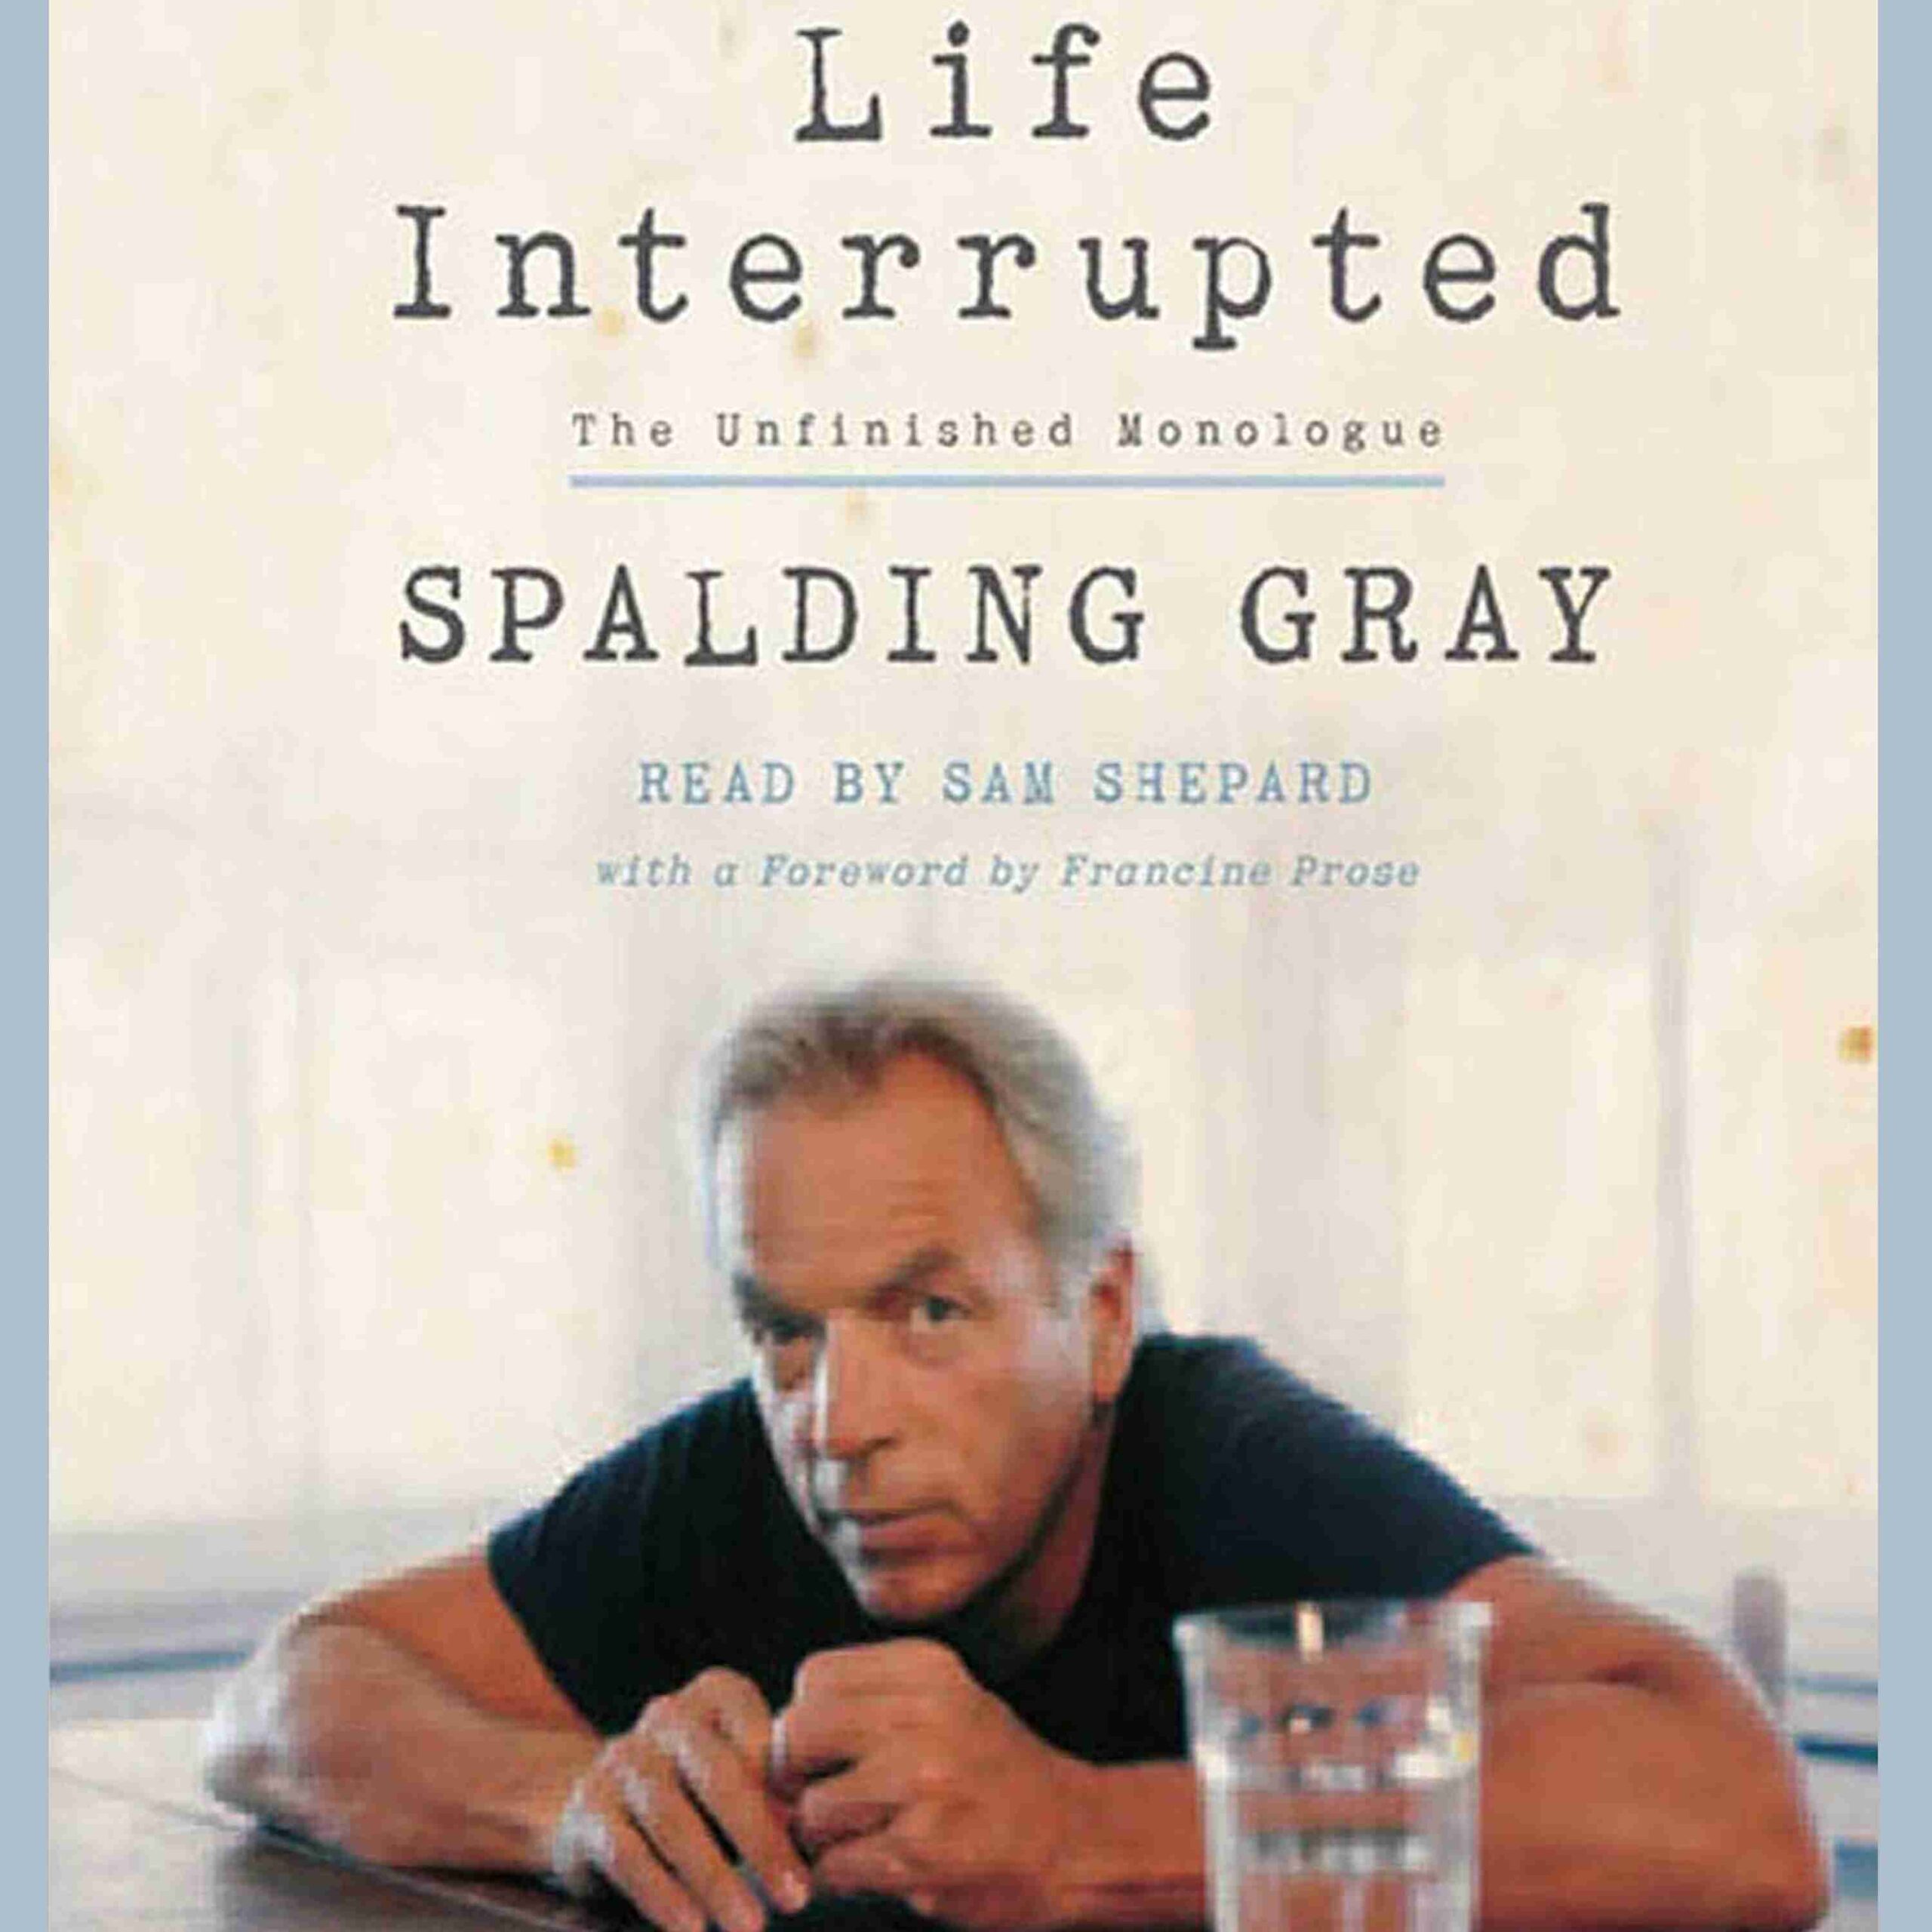 Life Interrupted bySpalding Gray Audiobook. 10.99 USD